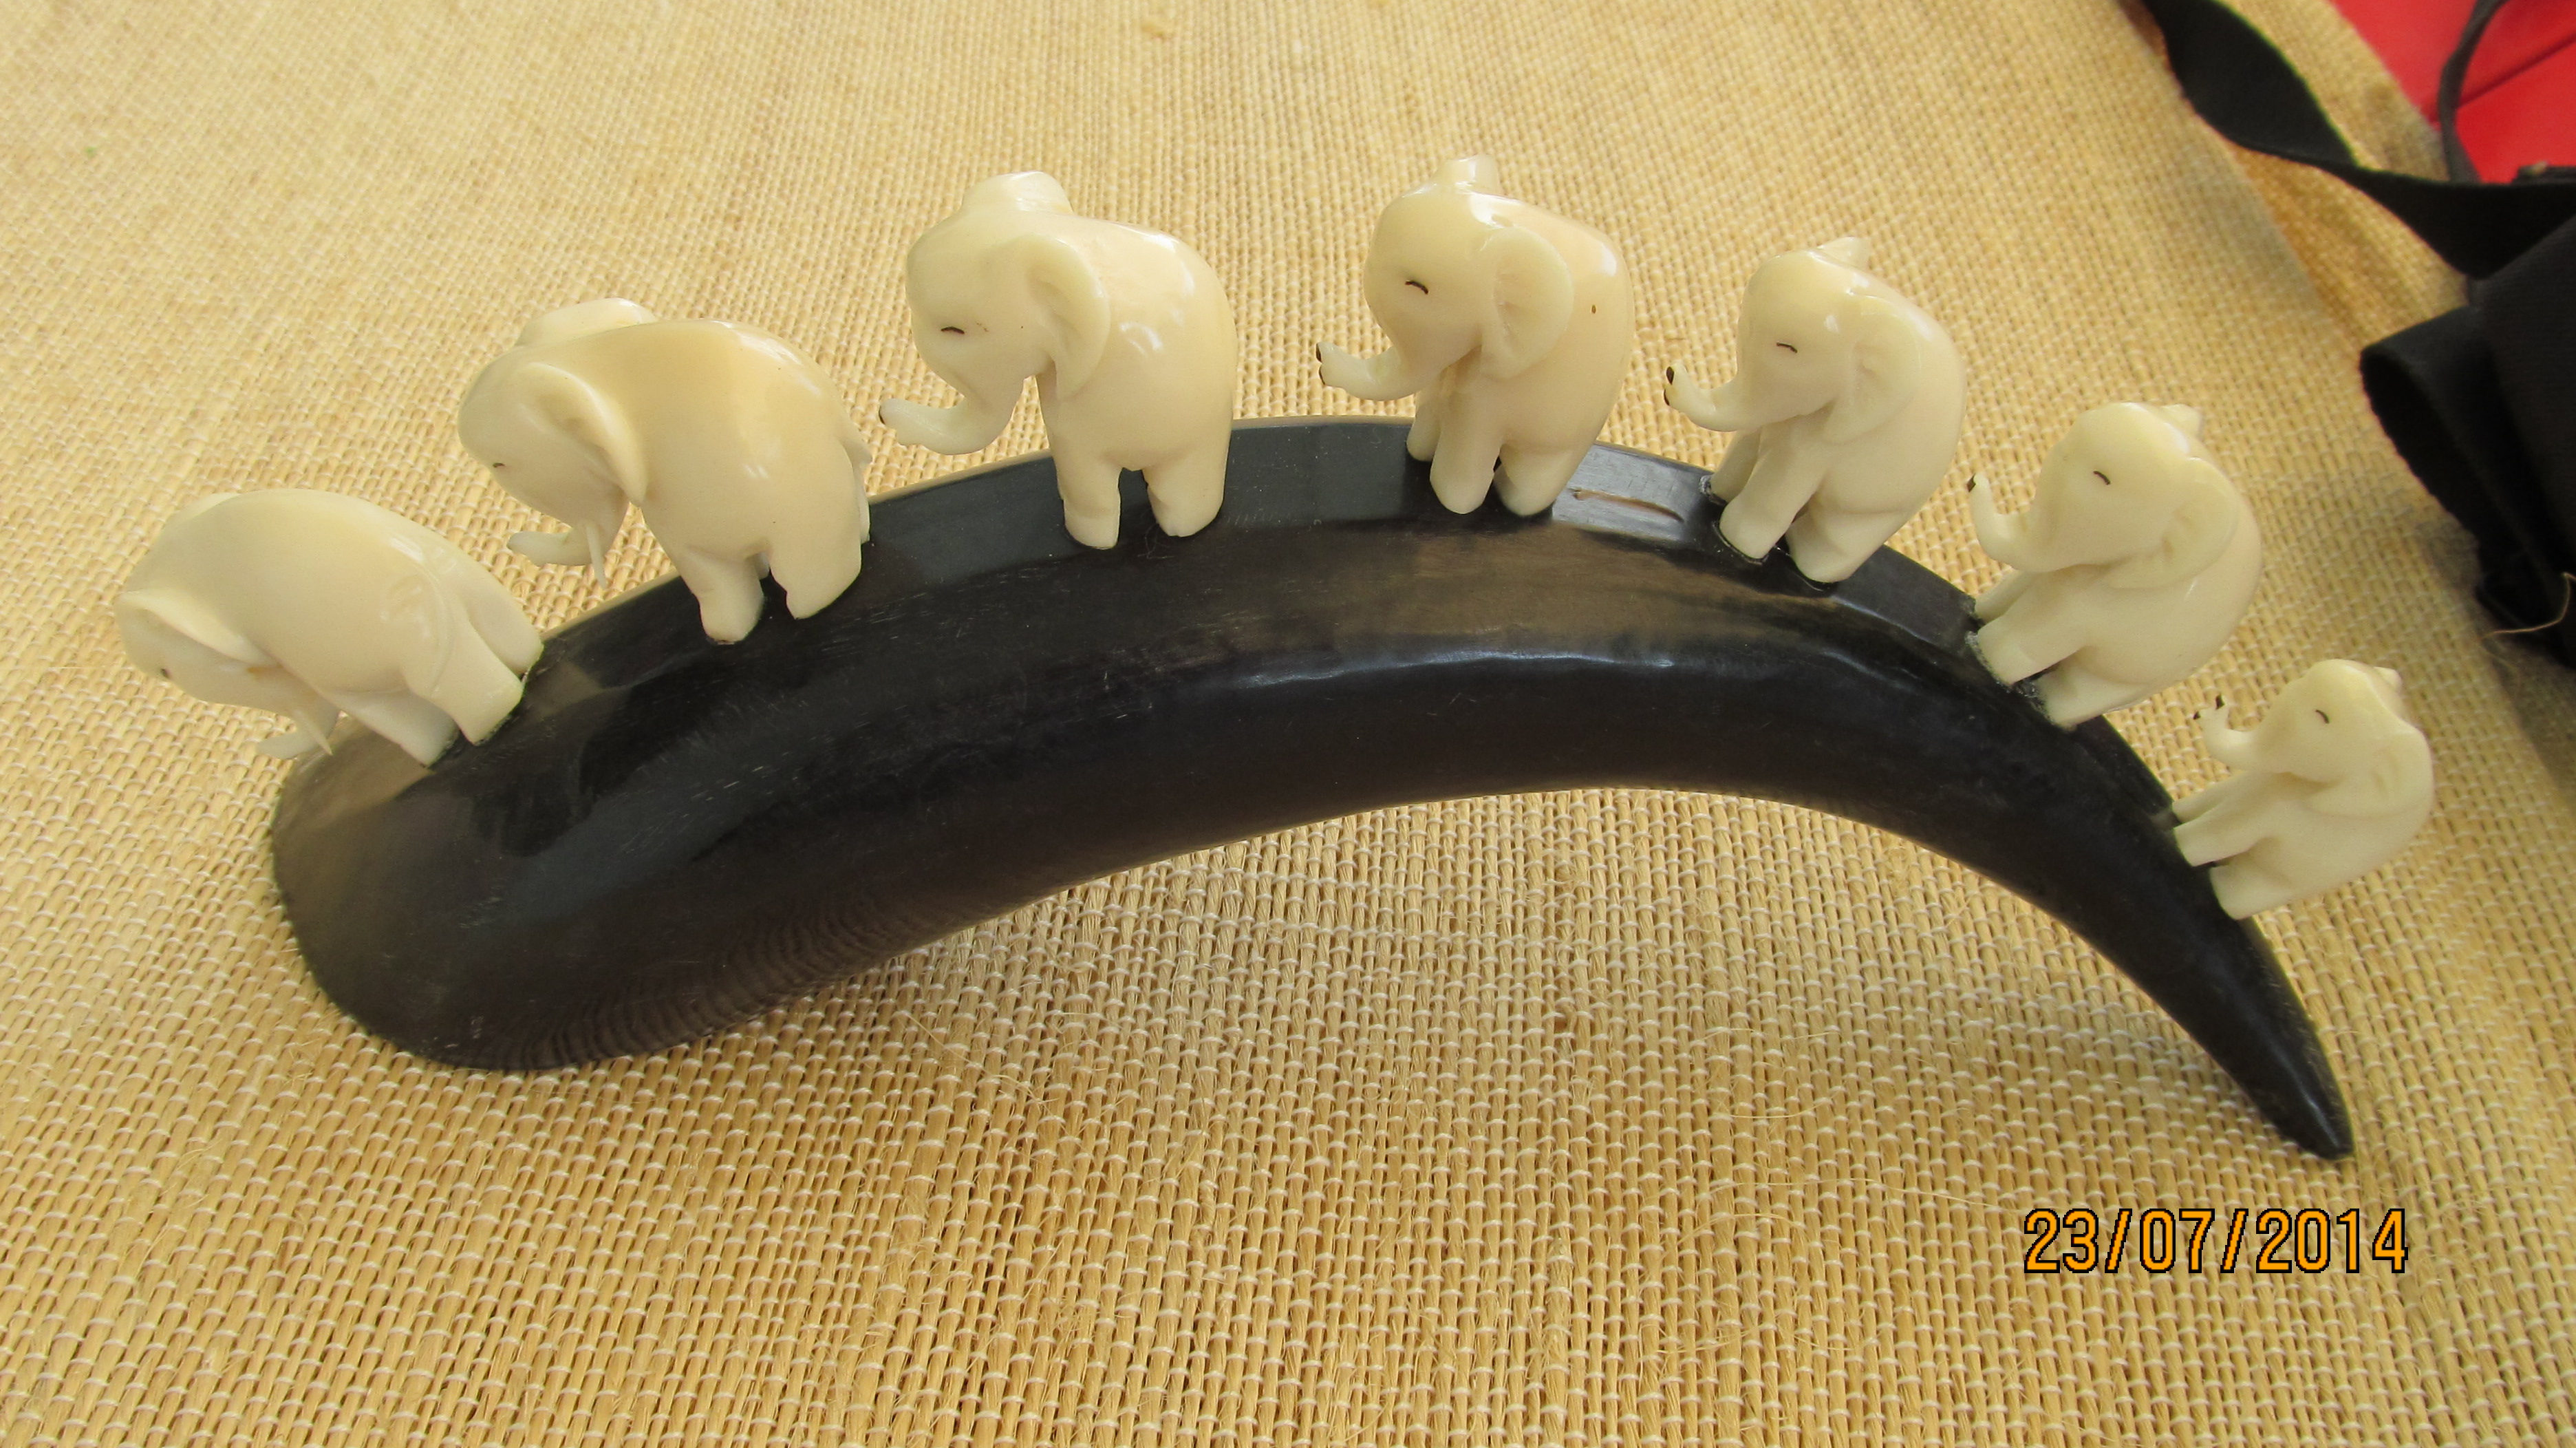 Elephants on a walk
~ It`s Tagua ~